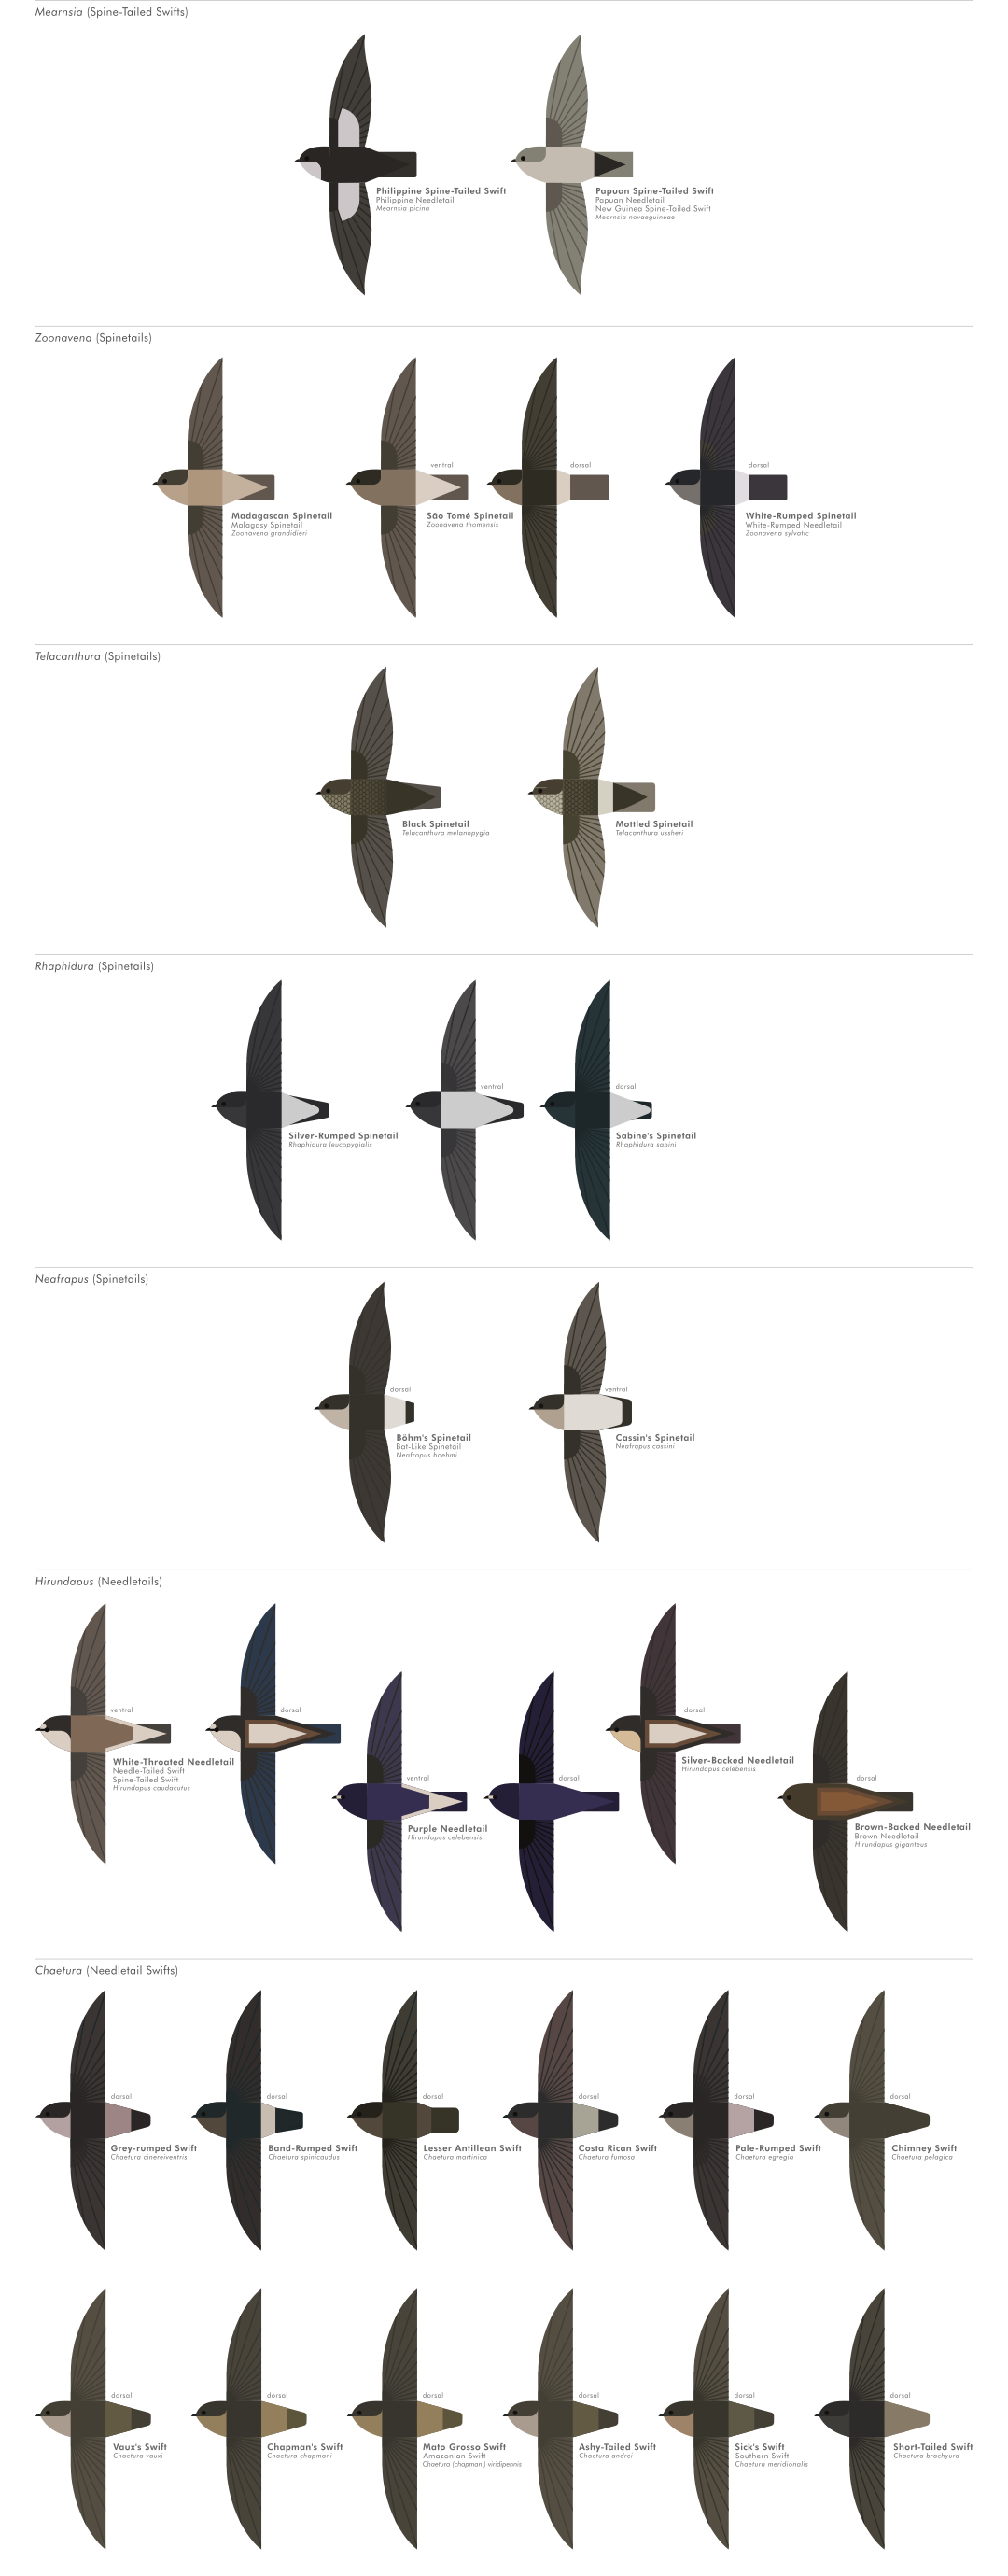 scott partridge - ave - avian vector encyclopedia - swifts Apodiformes - vector bird art